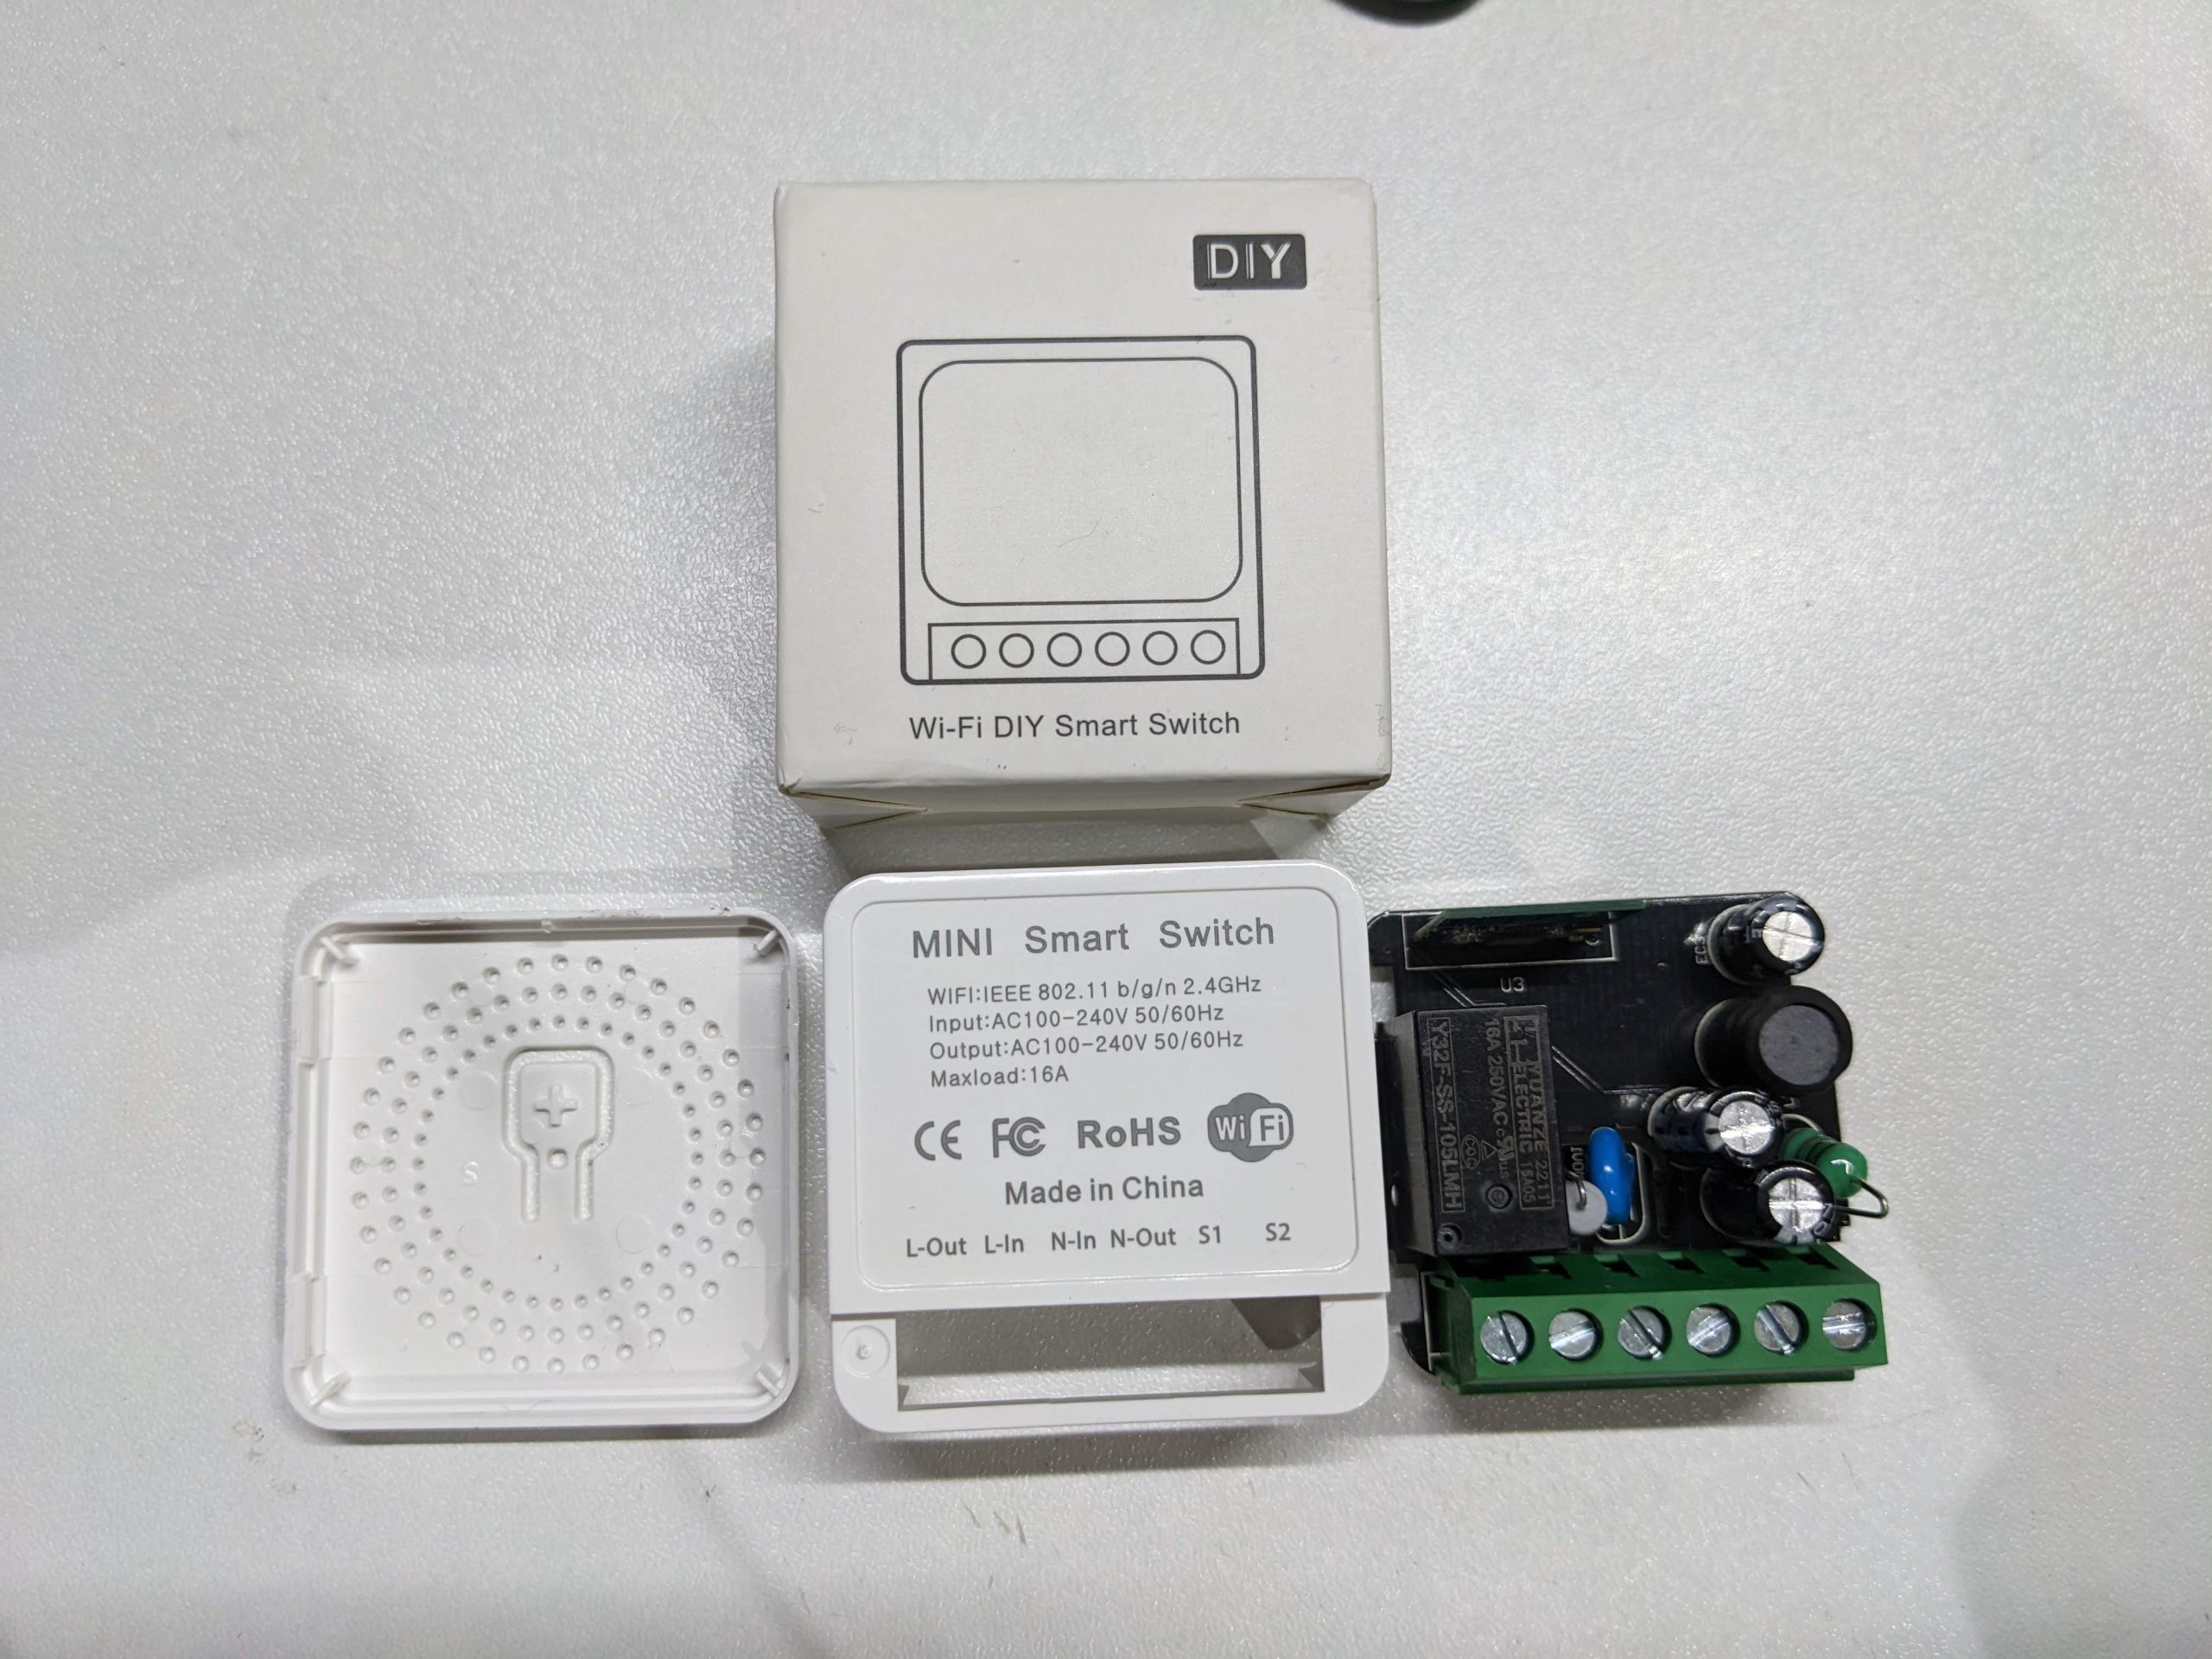 AliExpressで買ったスマートスイッチを両切りスイッチに改造
86-TDQ INN0V2
Wi-Fi DIY Smart Switch mini
Tuya Smart Life